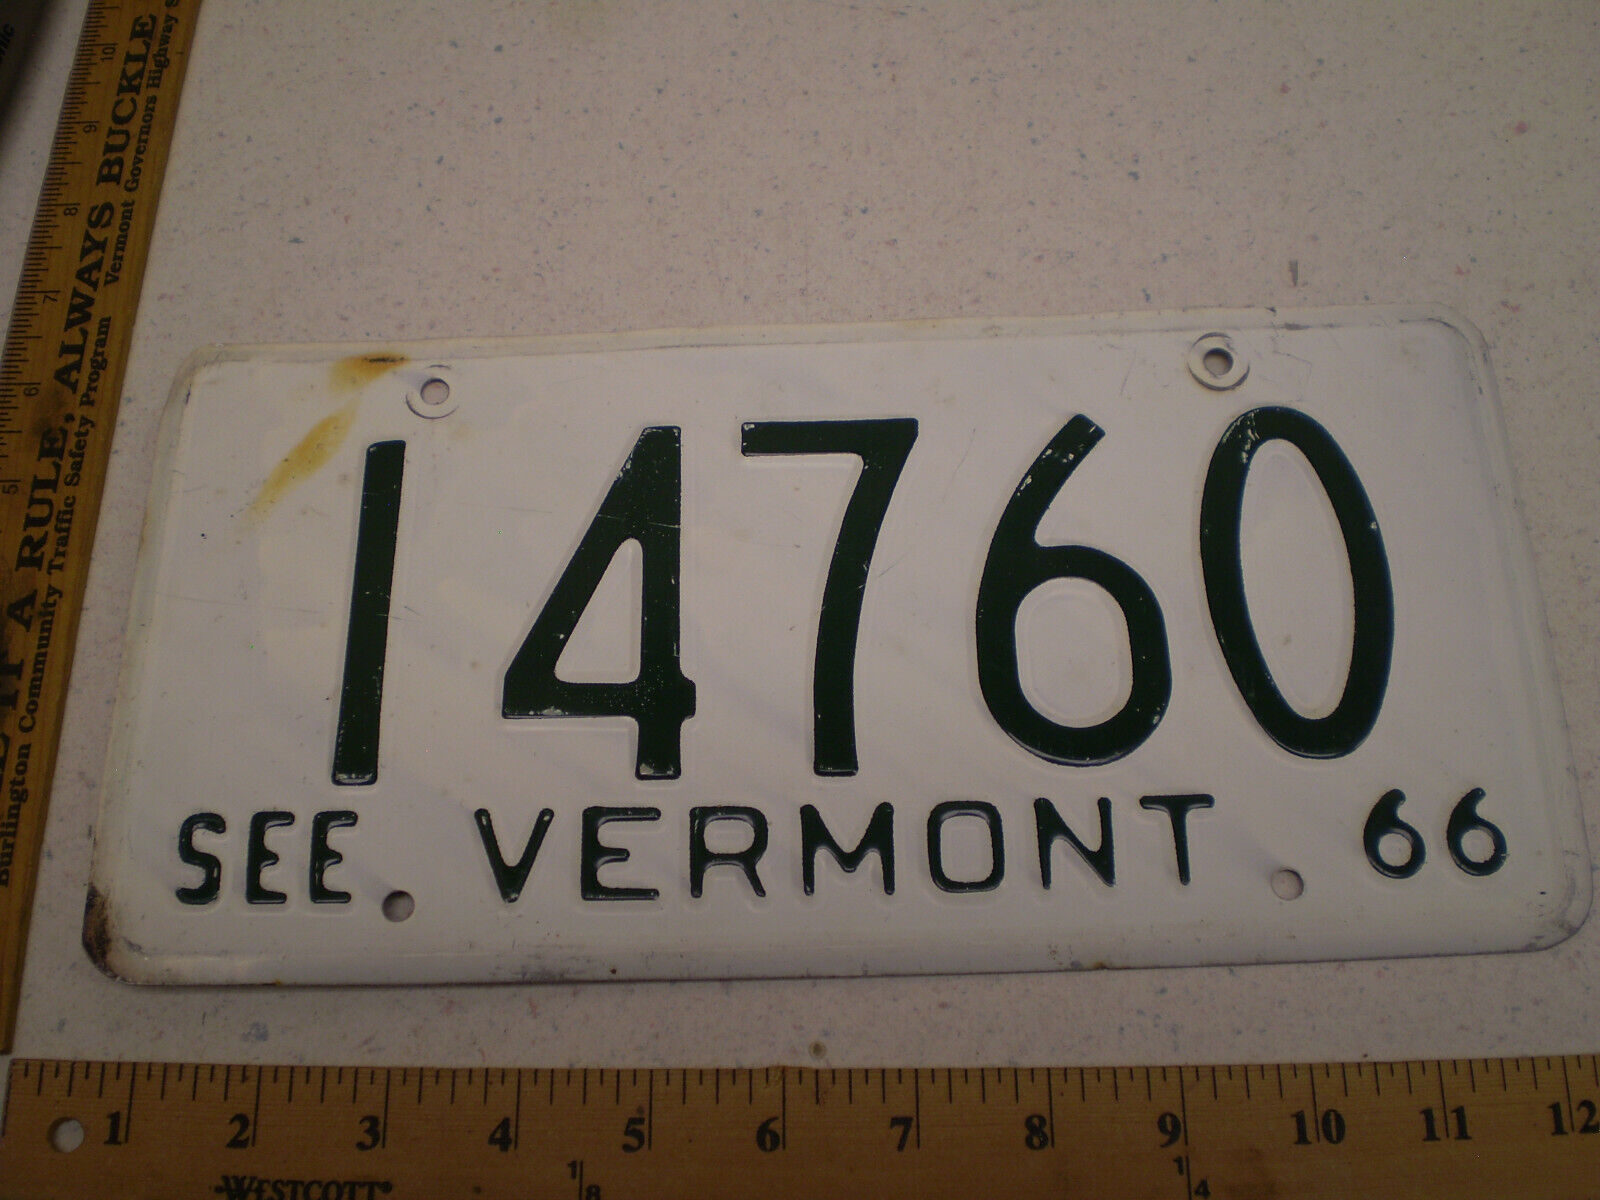 1966 66 Vermont Vt License Plate 14760